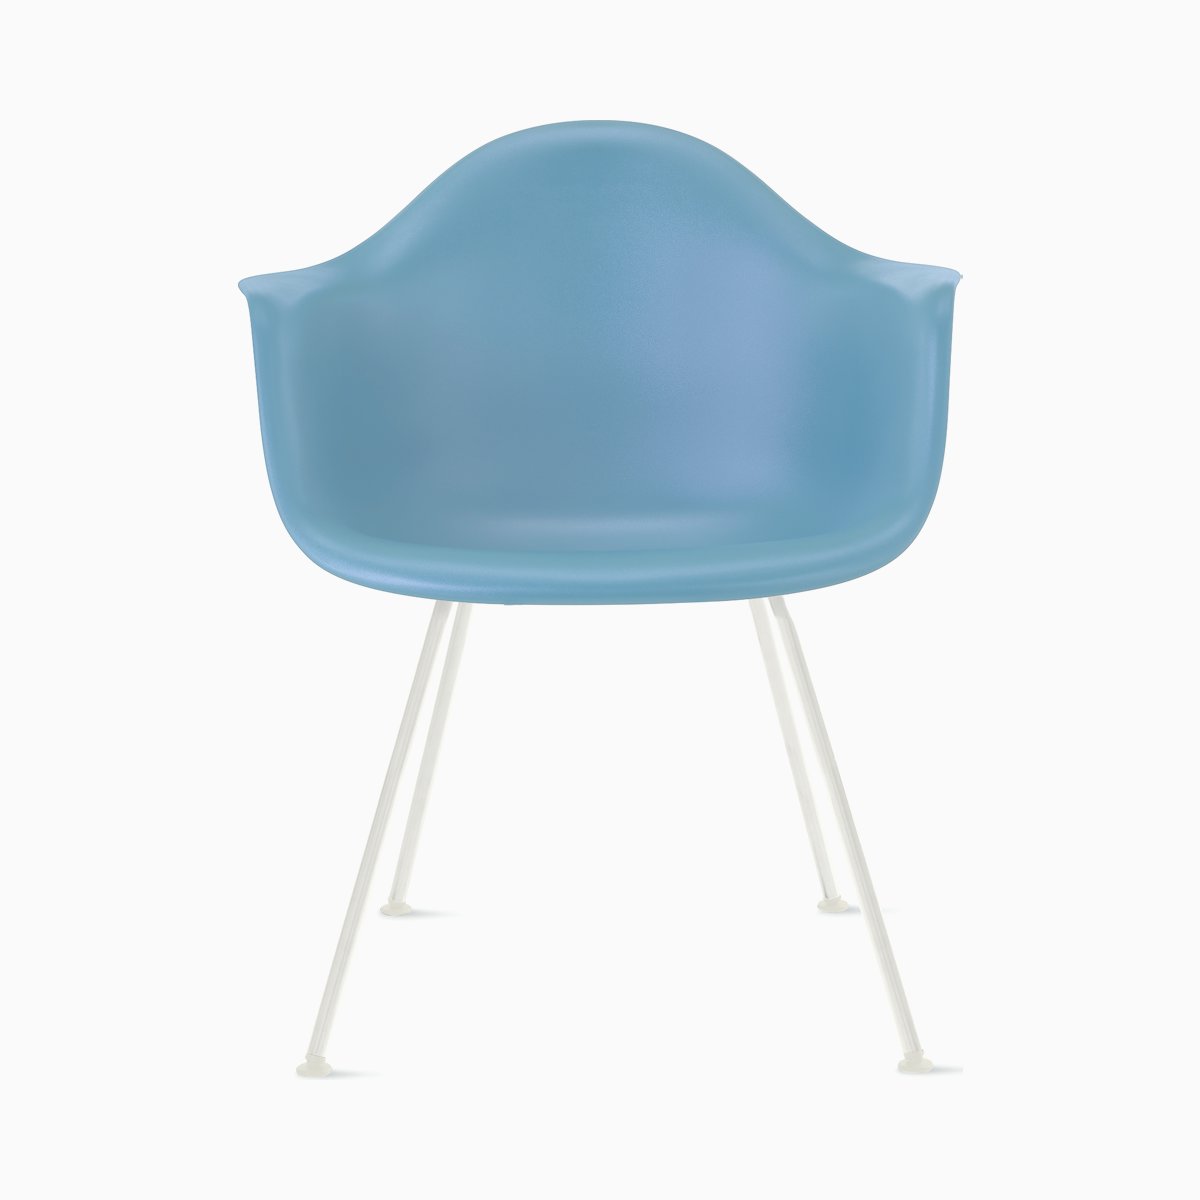 Eames Molded Plastic Armchair